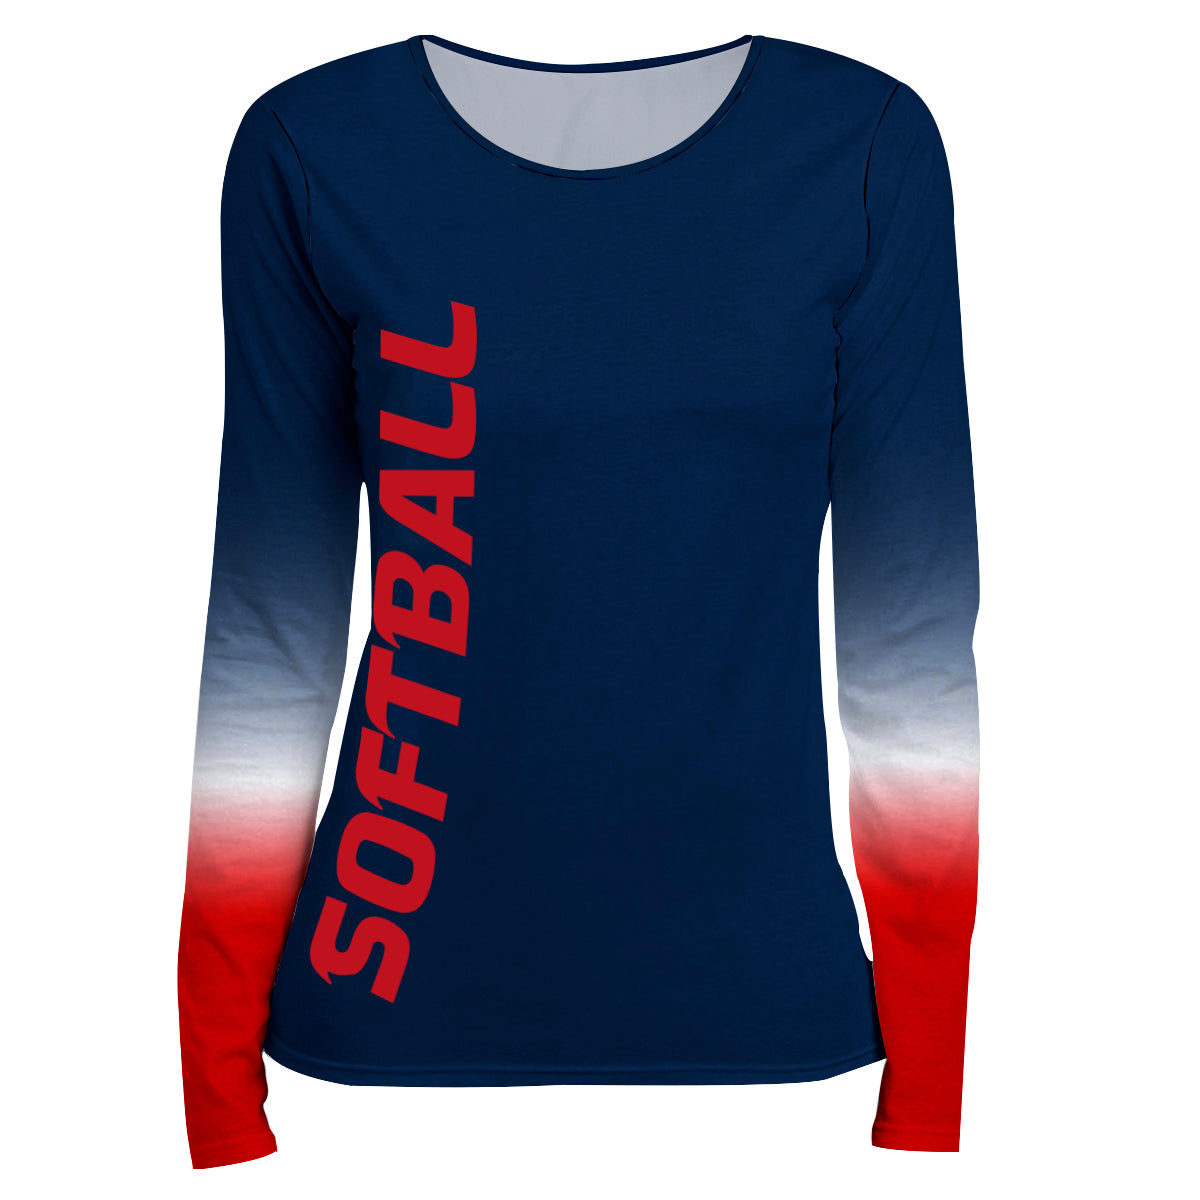 Softball Navy and Red Degrade Long Sleeve Tee Shirt - Wimziy&Co.